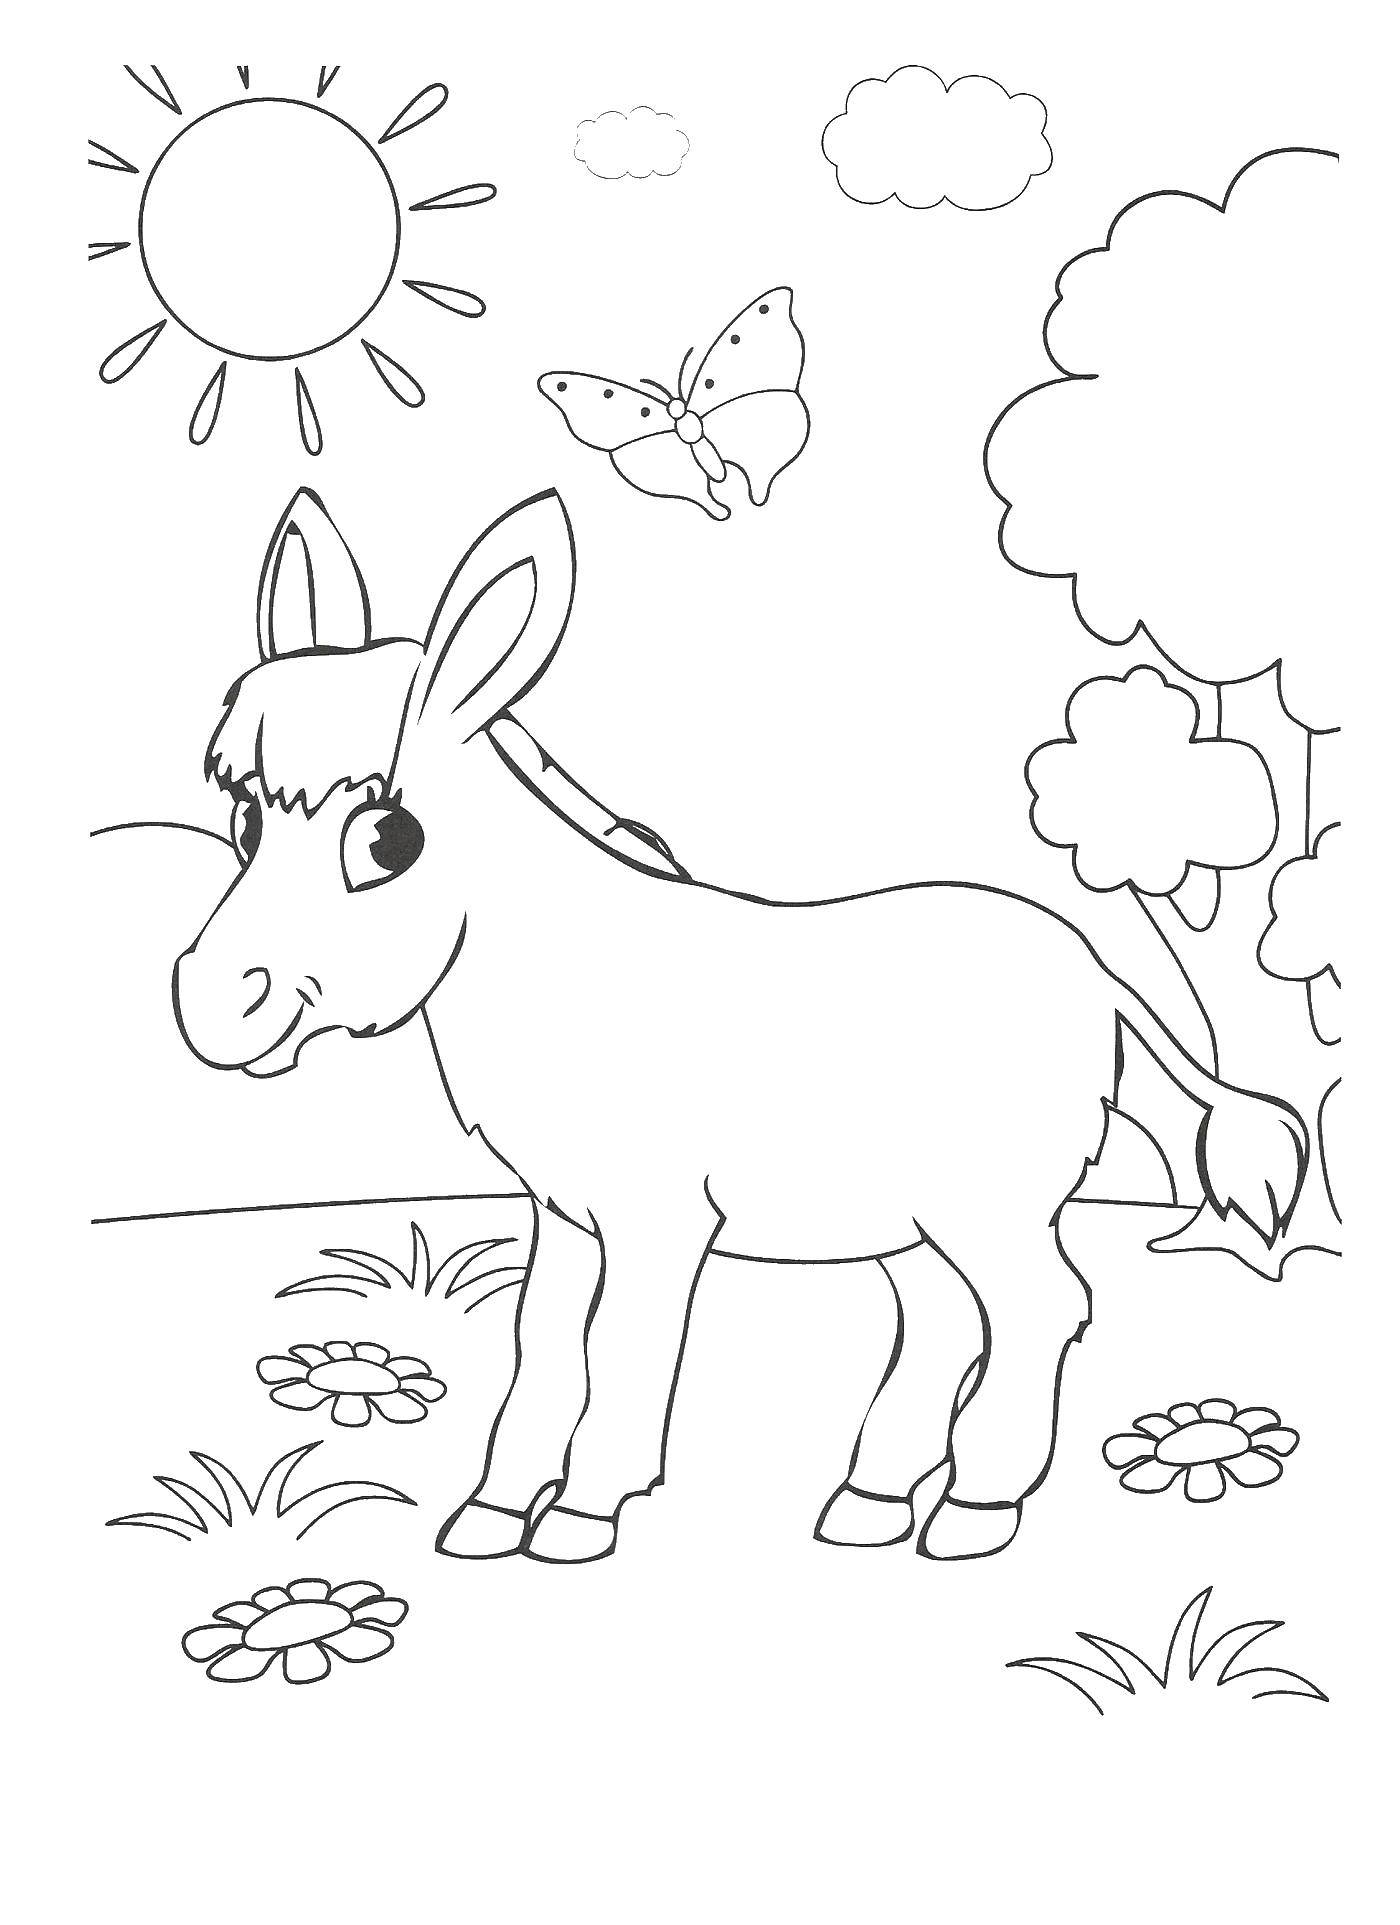 Coloring Donkey. Category Animals. Tags:  Donkey.